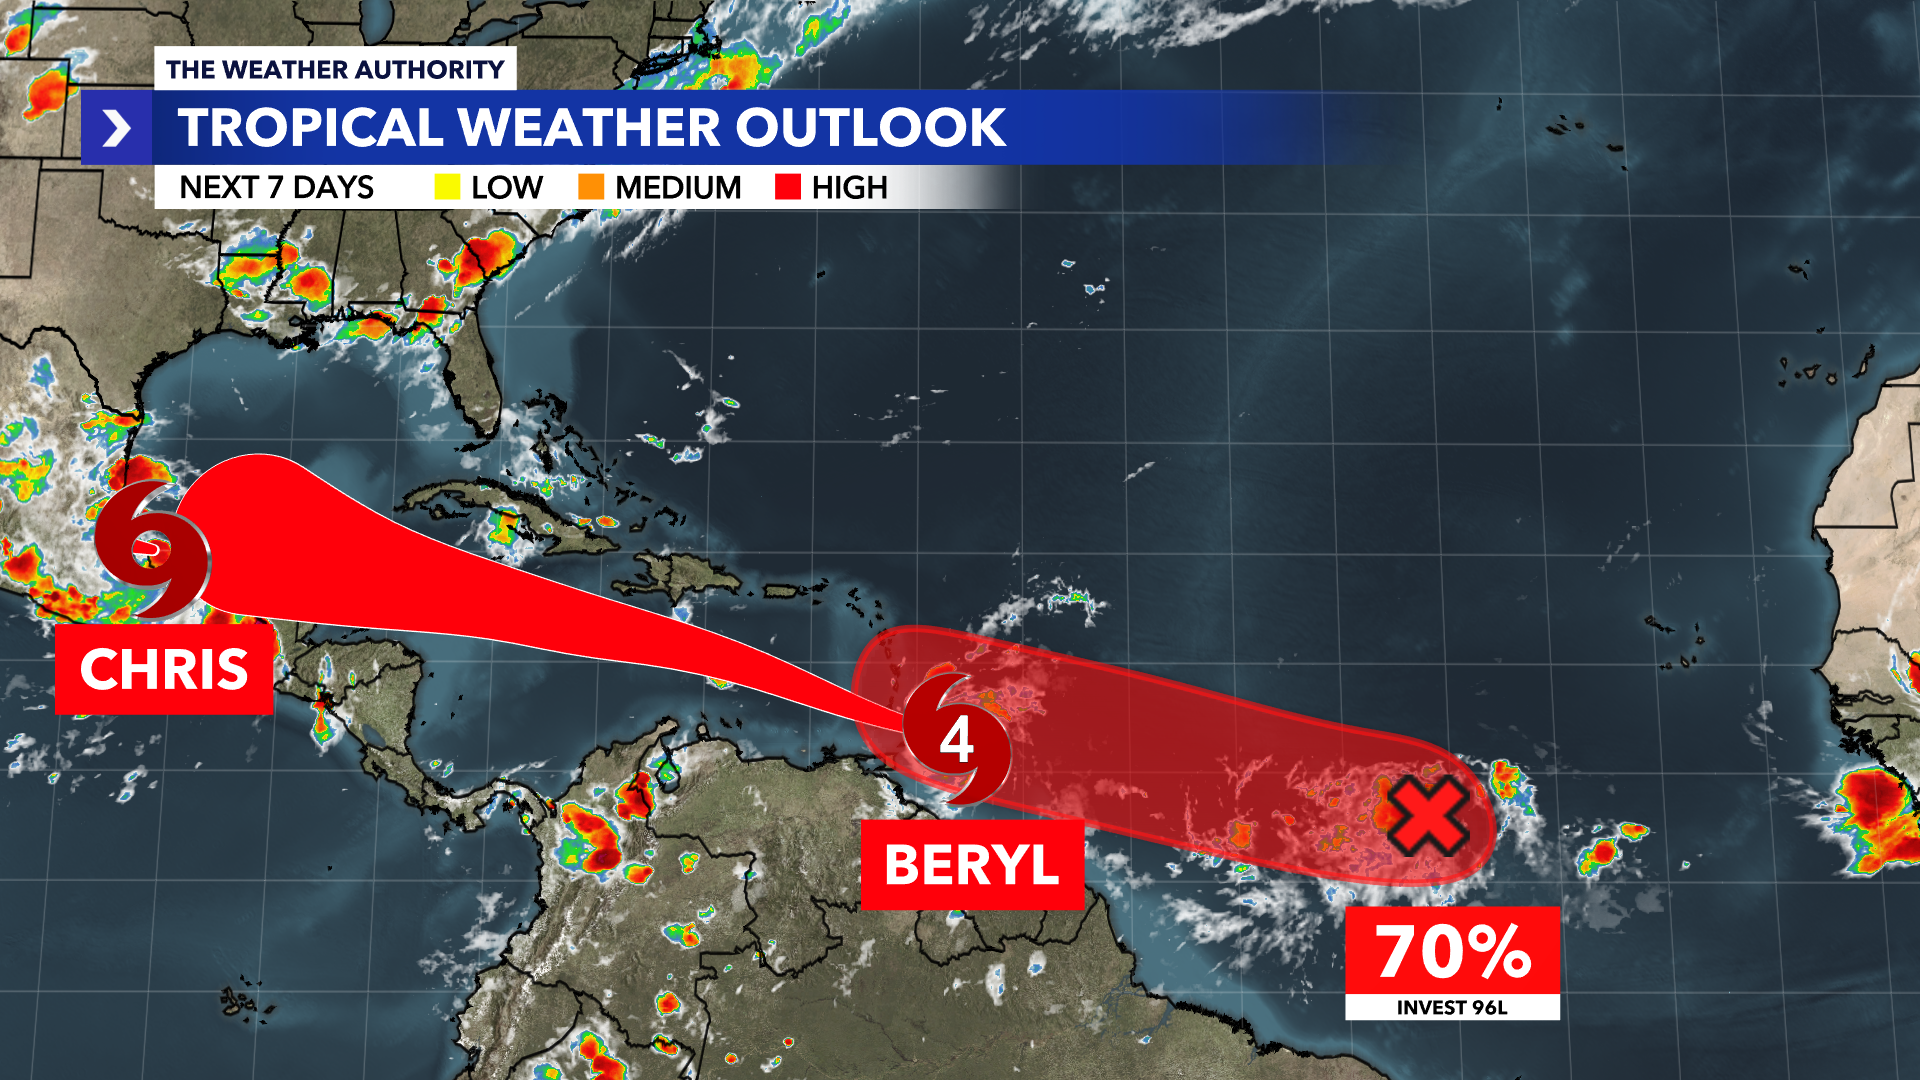 Hurricane Beryl, Tropical Storm Chris, Invest 96L